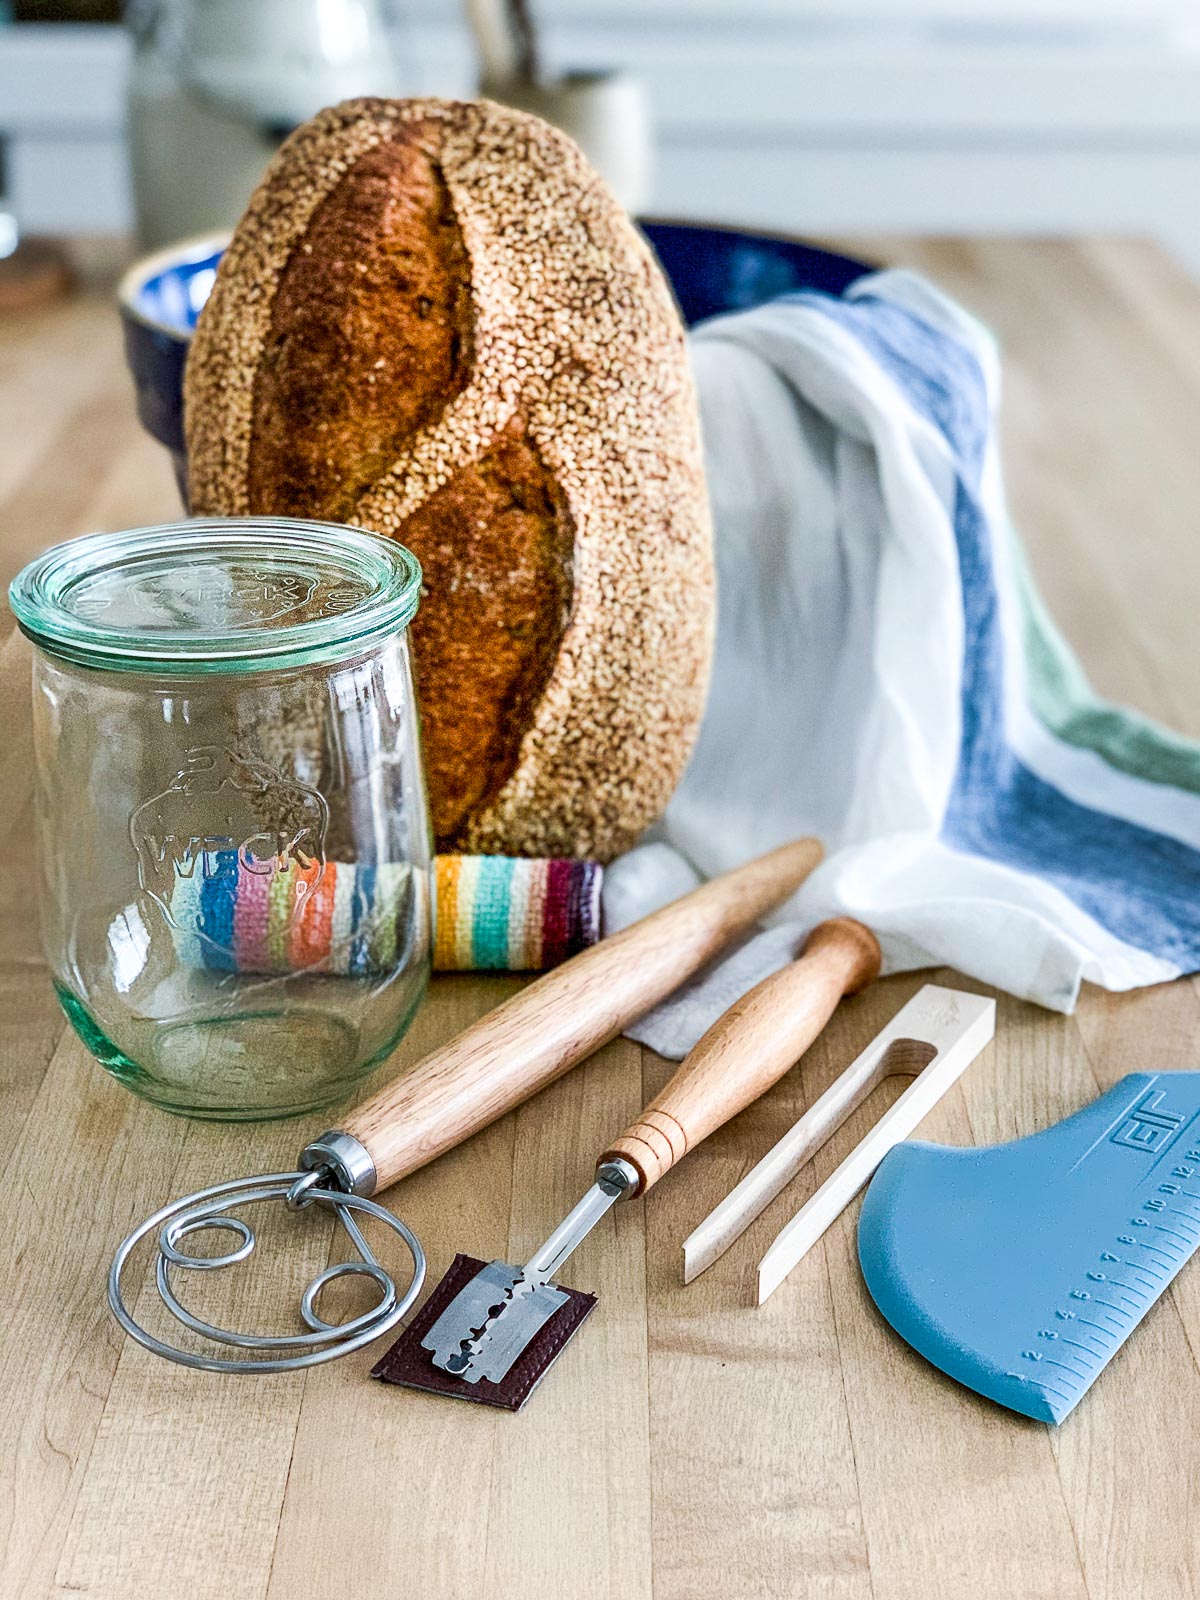 Bread-Baking Tools You Need